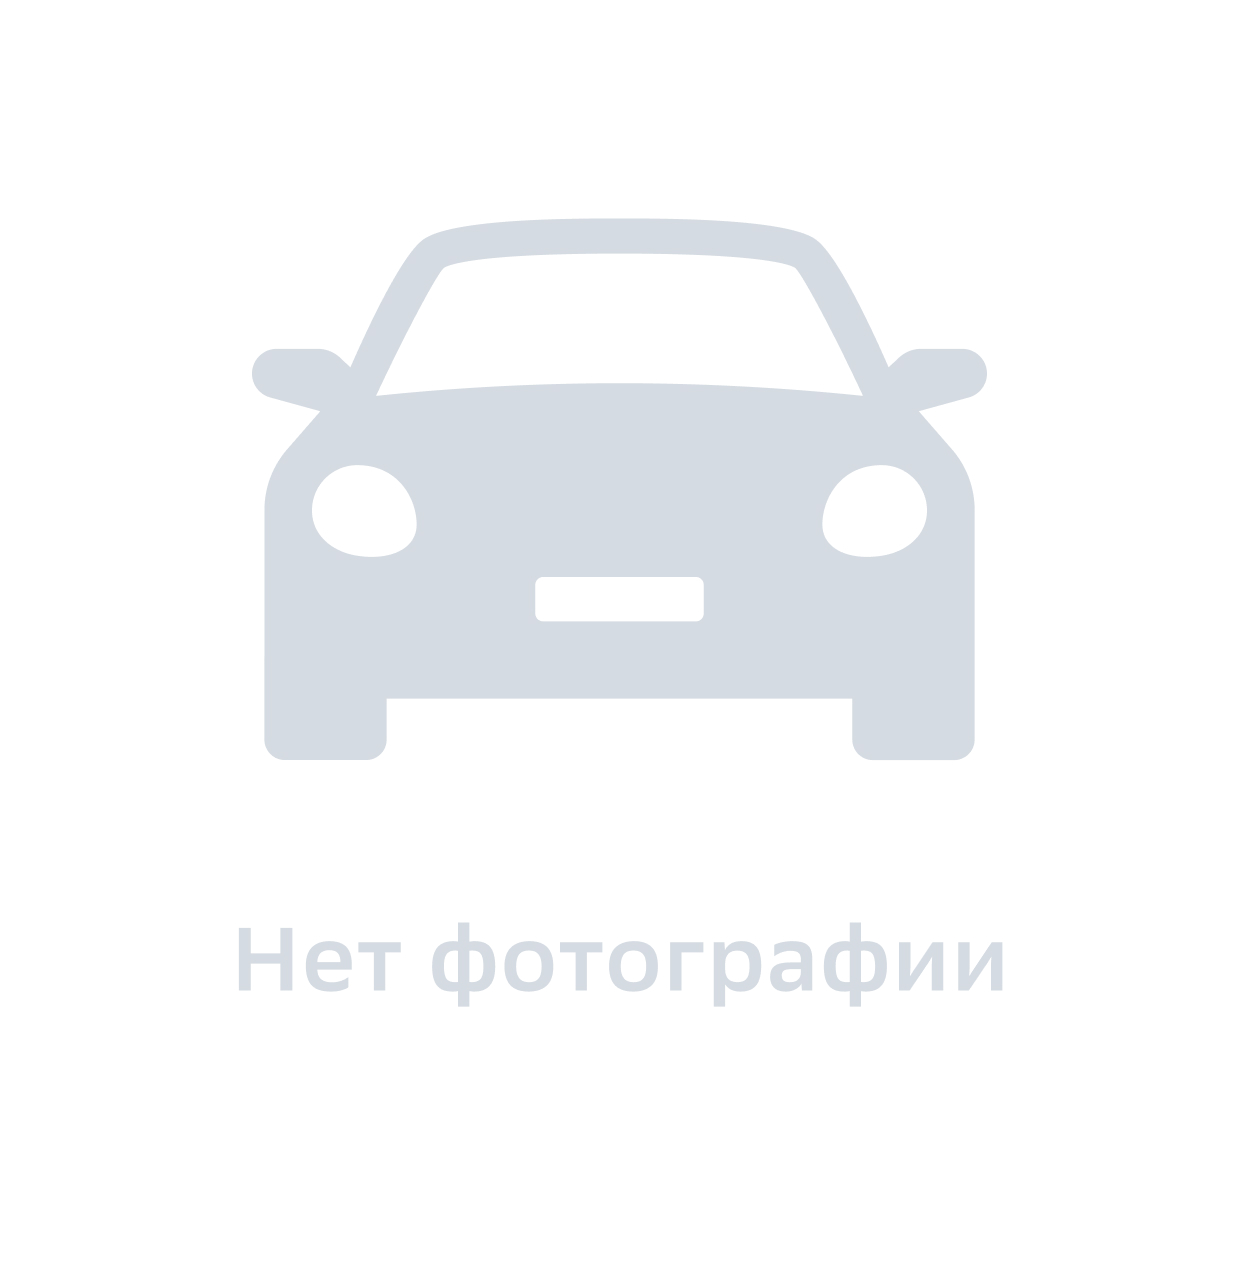 Фара Передняя Mercedes-Benz Vito (2010-2015) Левая С Электрокорректором